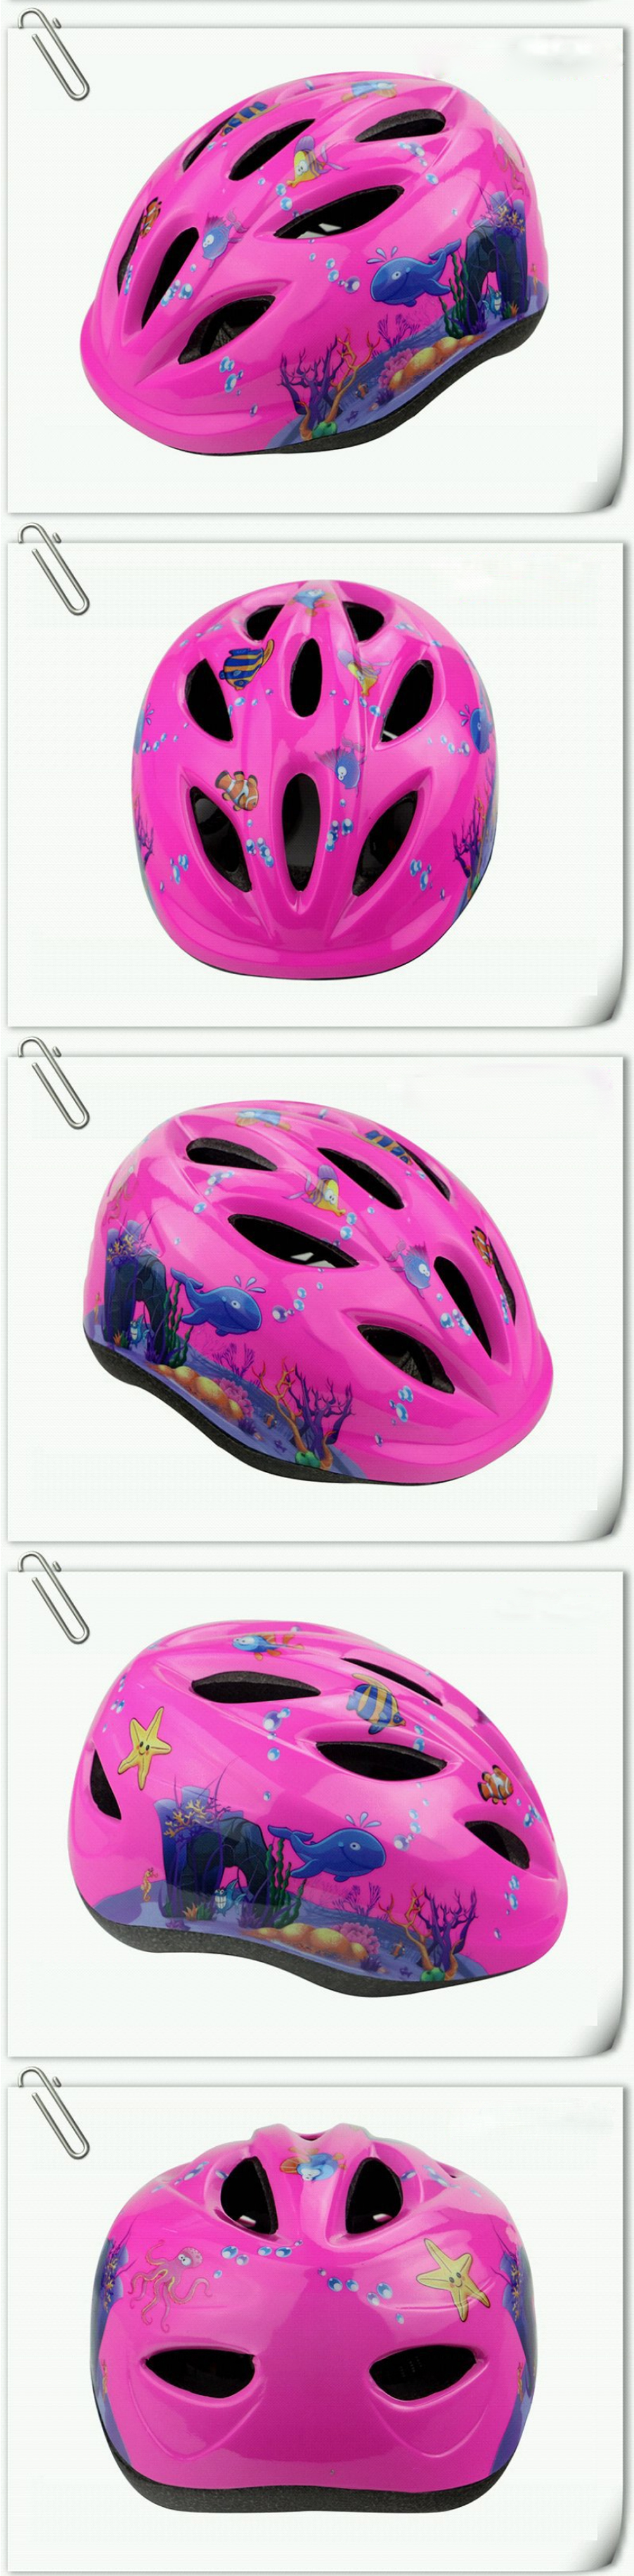 Adjustable-Toddler-Kids-Bicycle-Cycling-Helmet-Skating-Helmet-MTB-Bike-Mountain-Road-Cycling-Safety--1702808-2